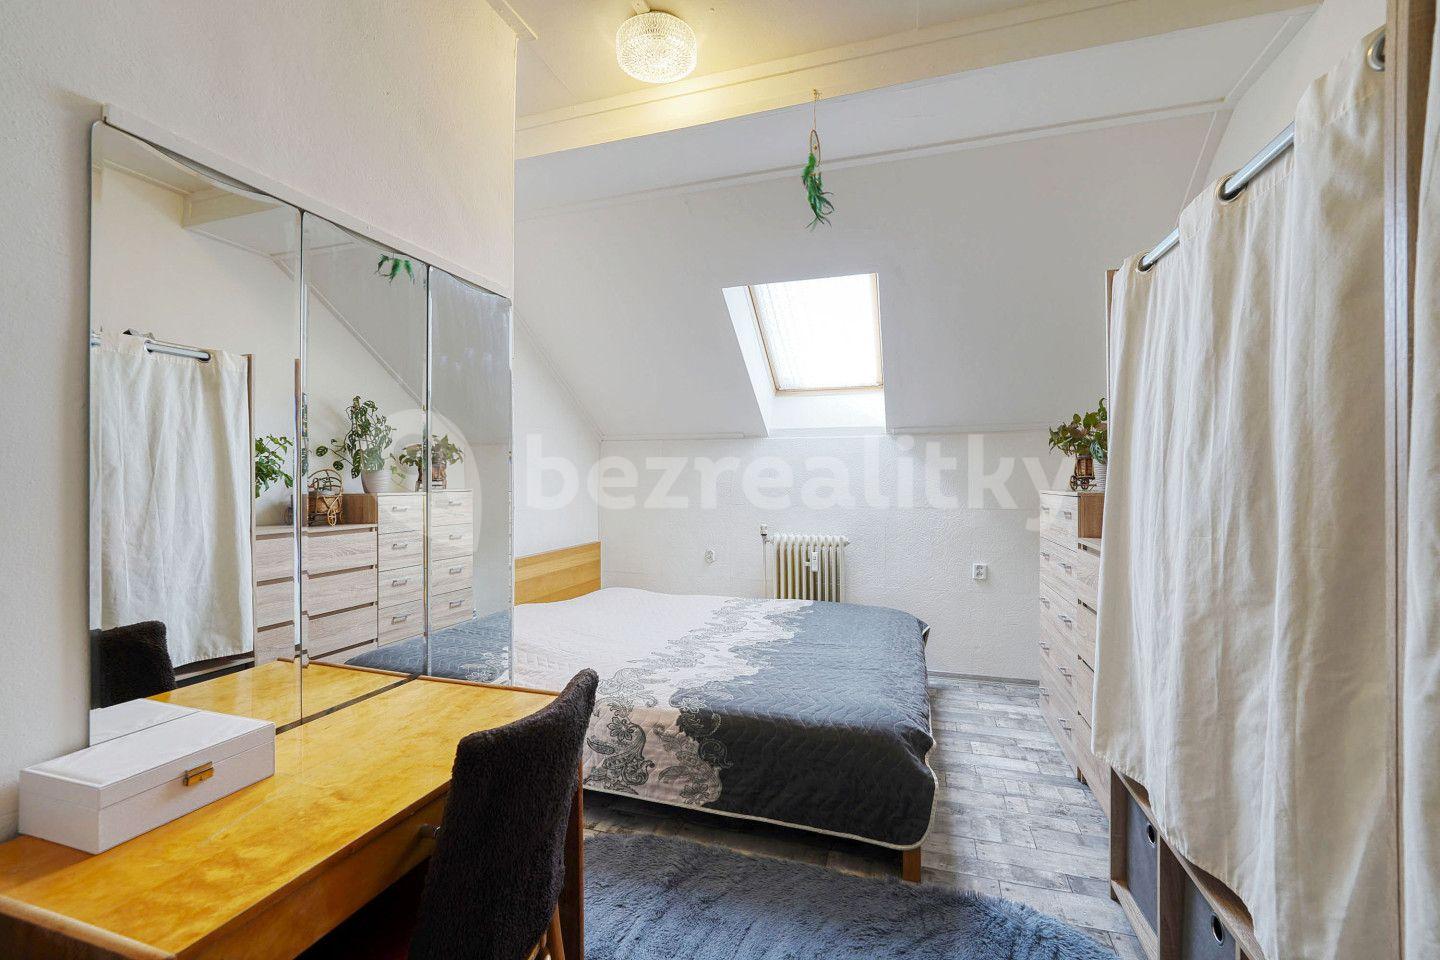 5 bedroom flat for sale, 105 m², Kryrská, Vroutek, Ústecký Region